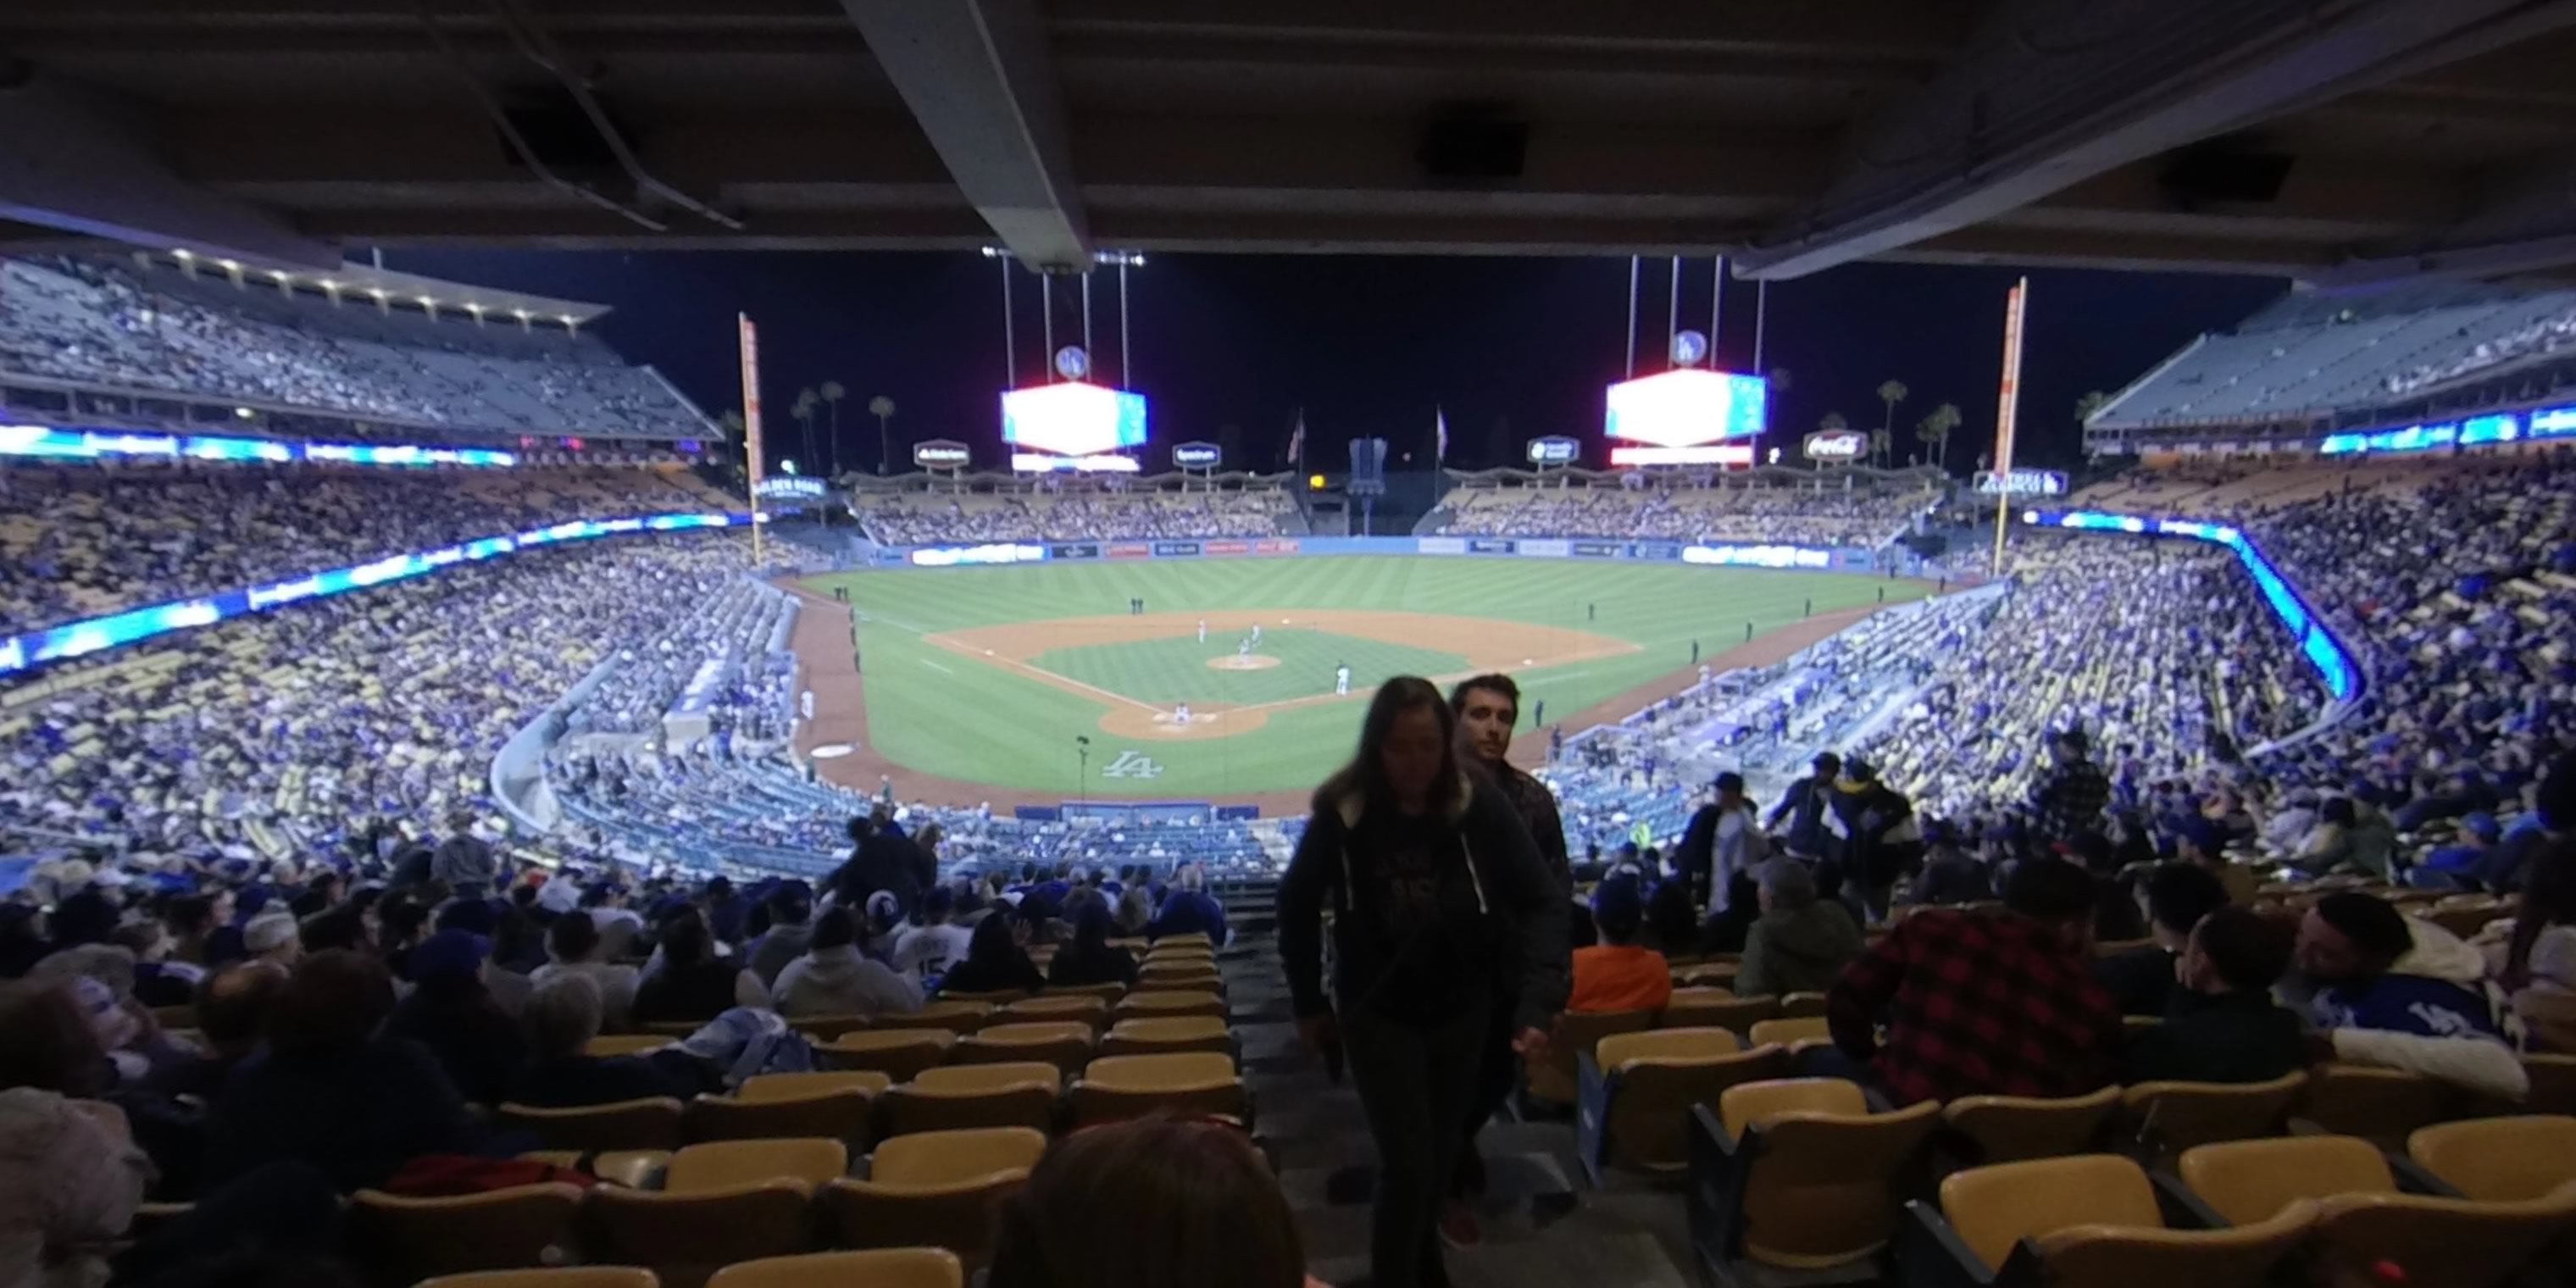 section 106 panoramic seat view  - dodger stadium